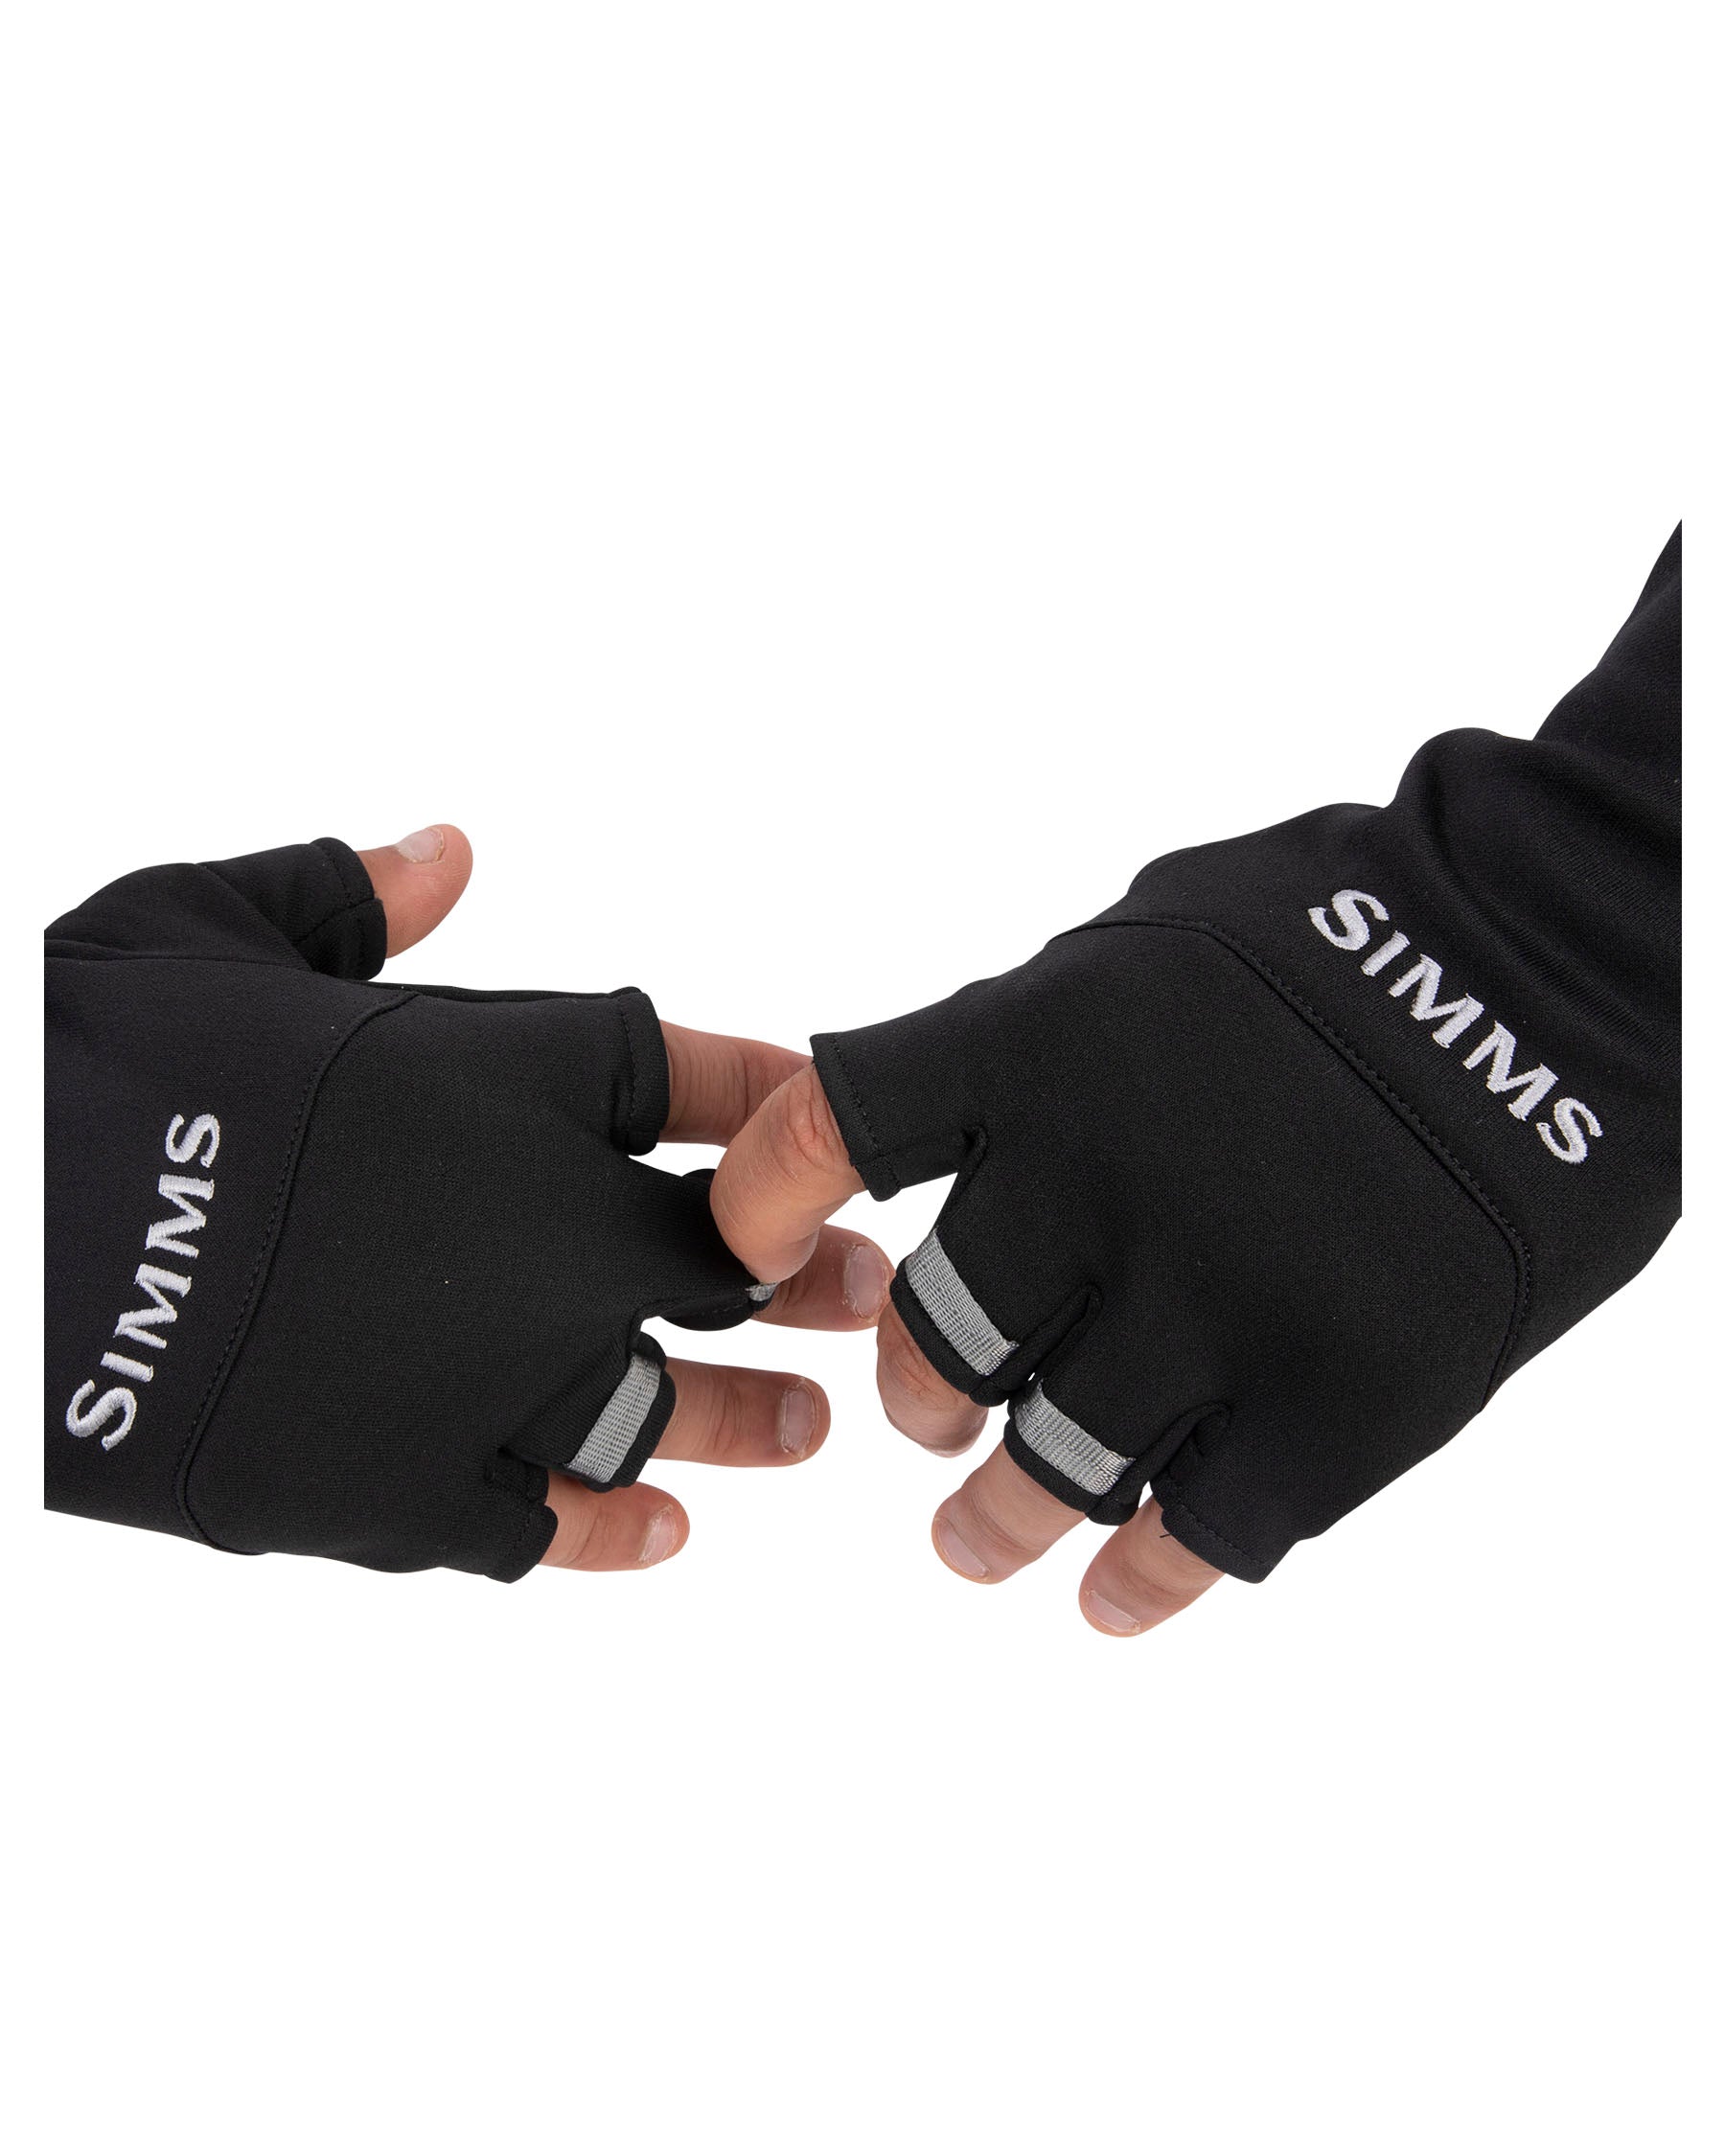 Simms Freestone® Half-Finger Glove